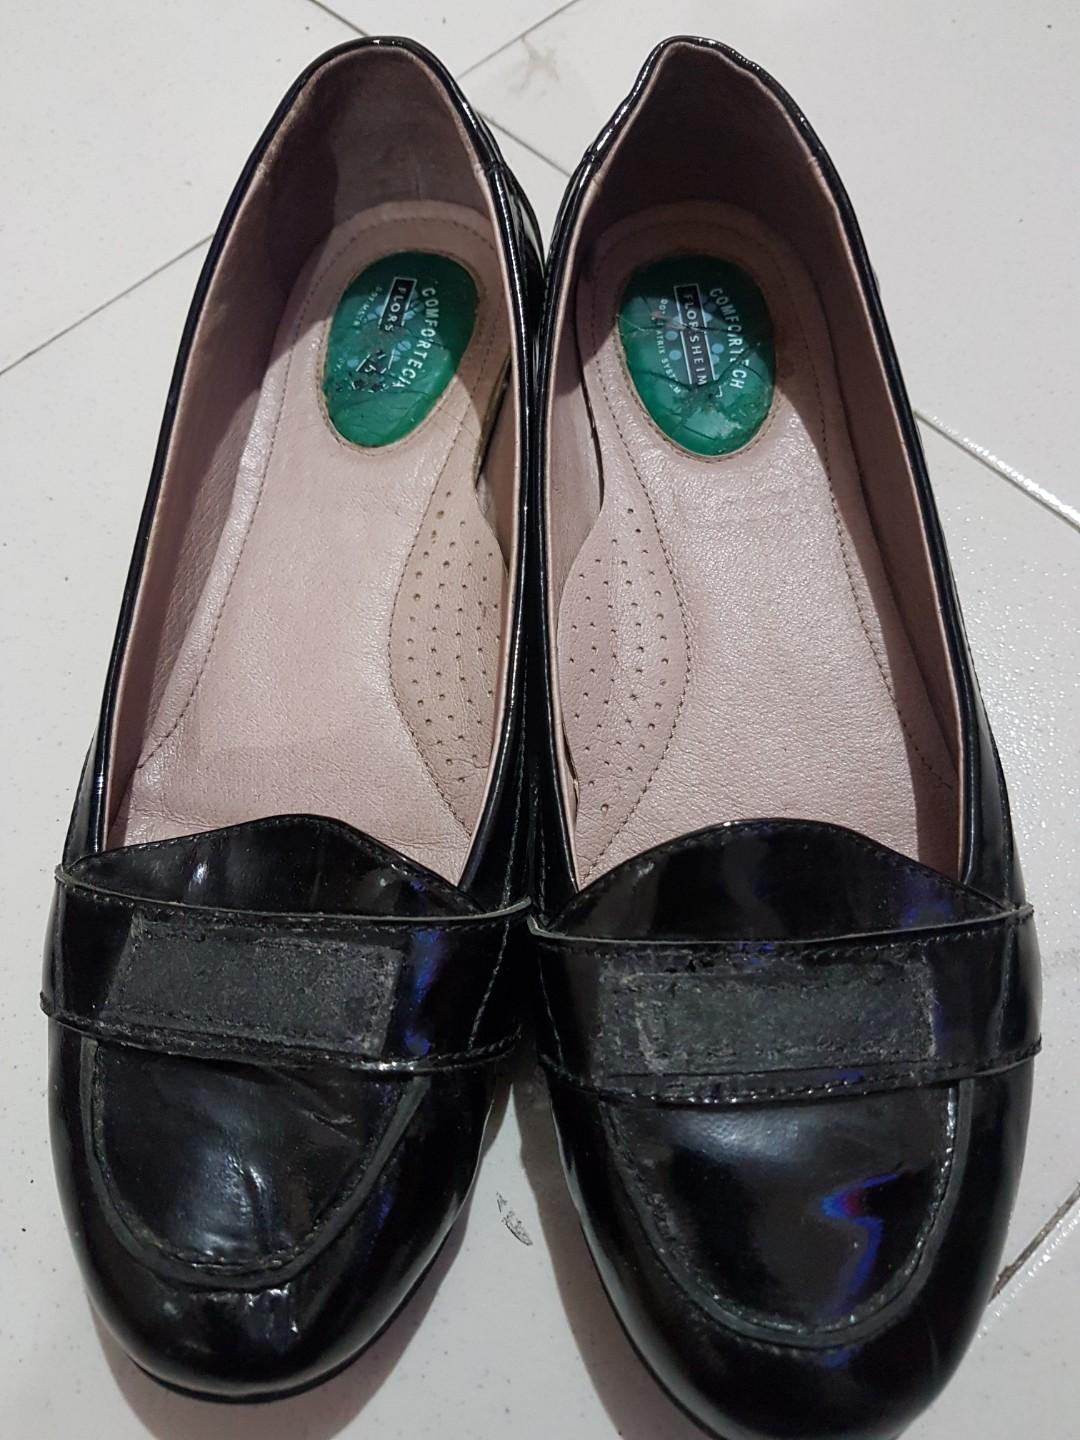 branded black shoes for school